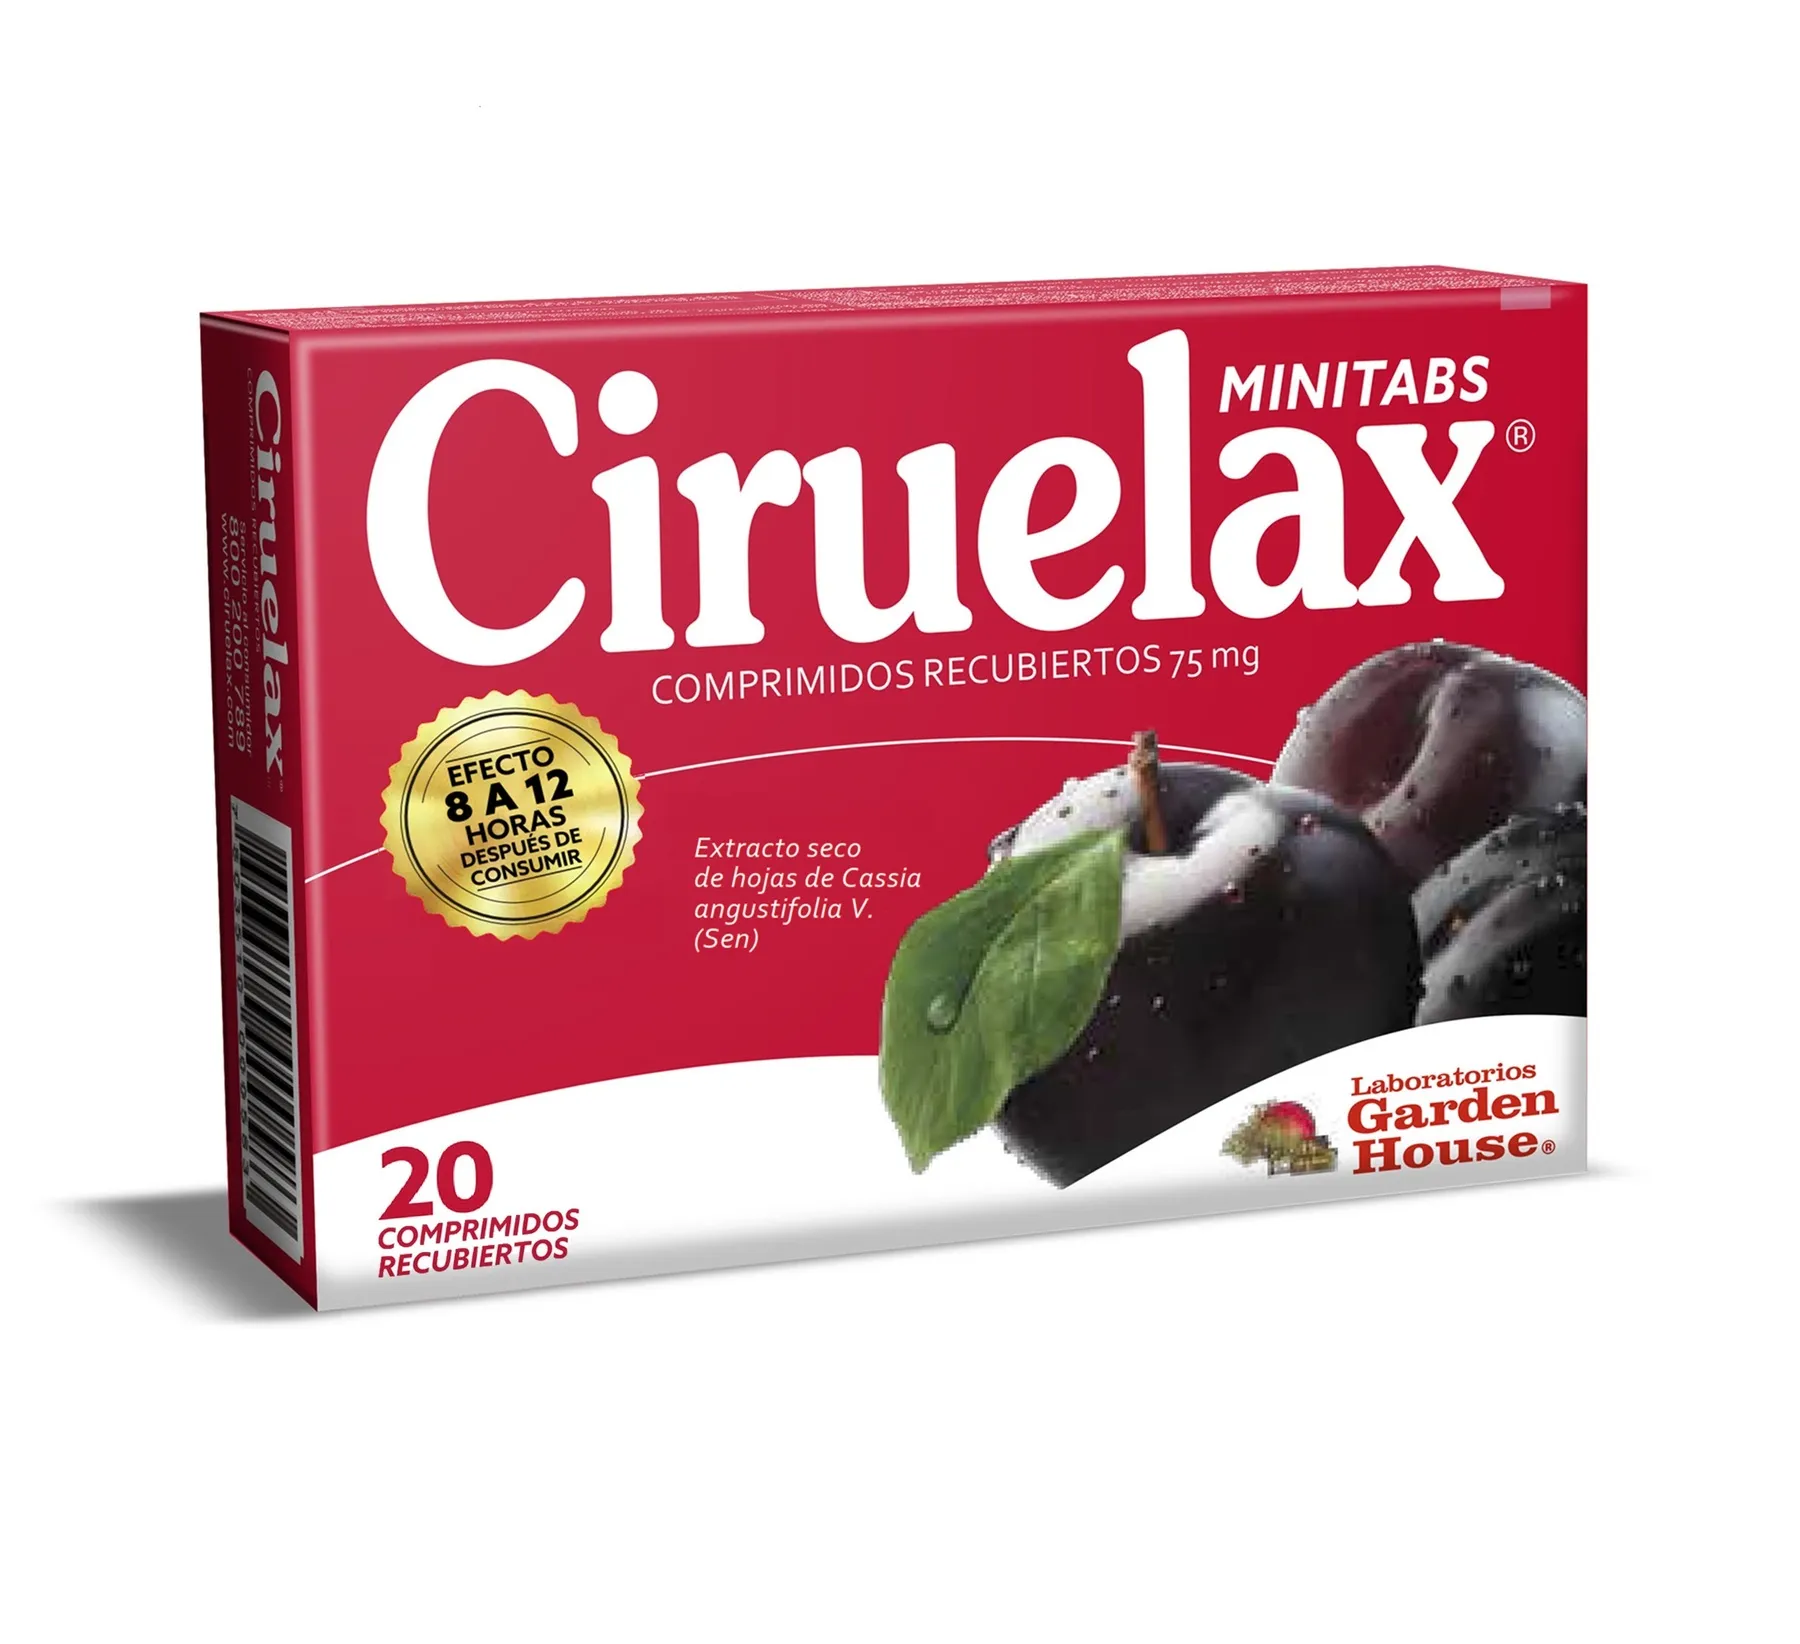 Ciruelax Minitabs 20 Comprimidos